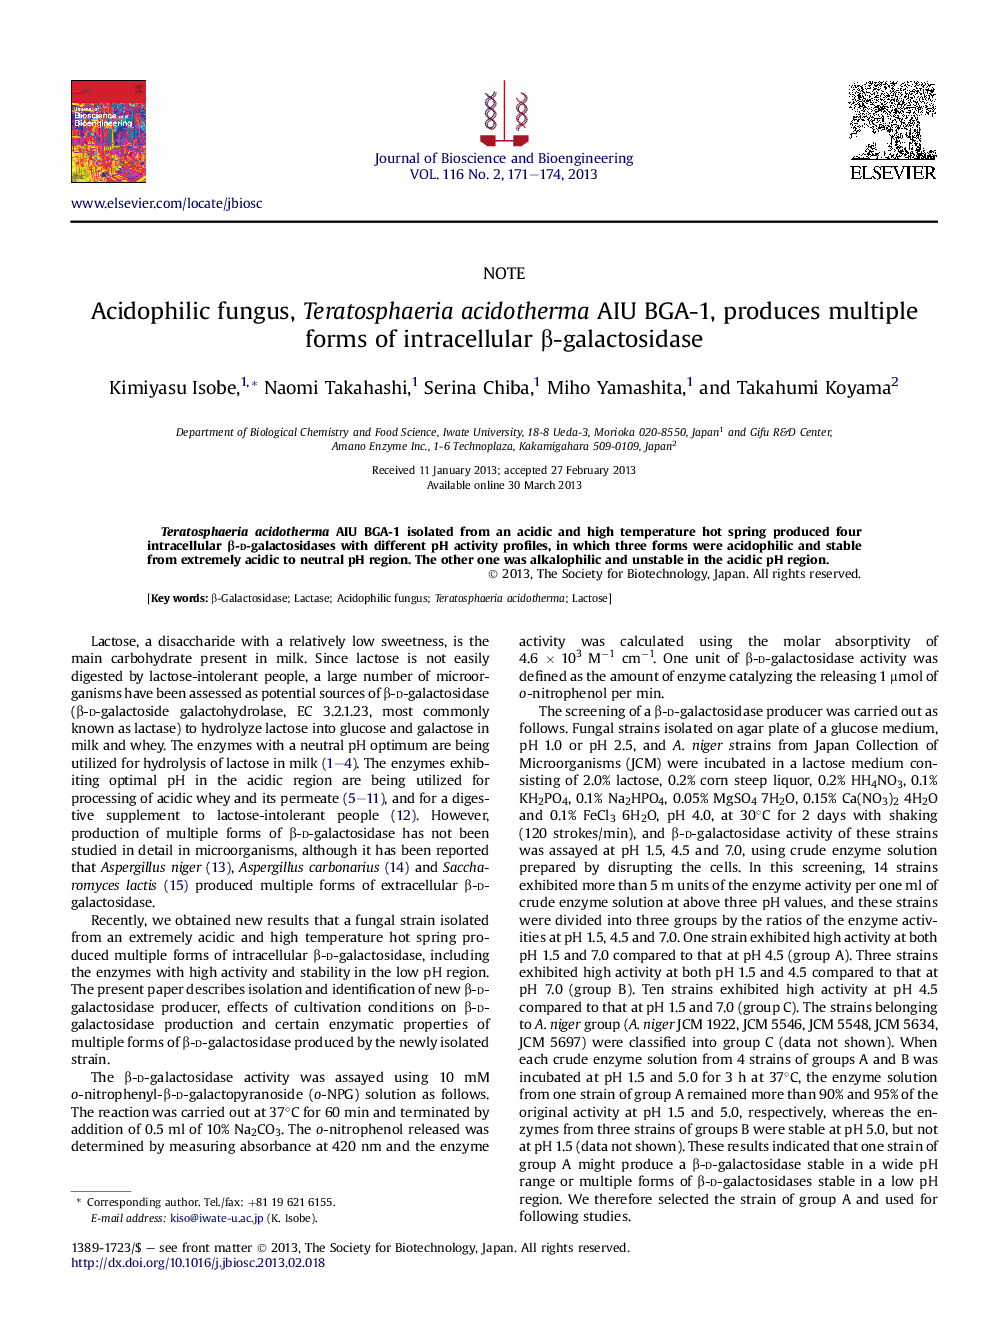 Acidophilic fungus, Teratosphaeria acidotherma AIU BGA-1, produces multiple forms of intracellular β-galactosidase